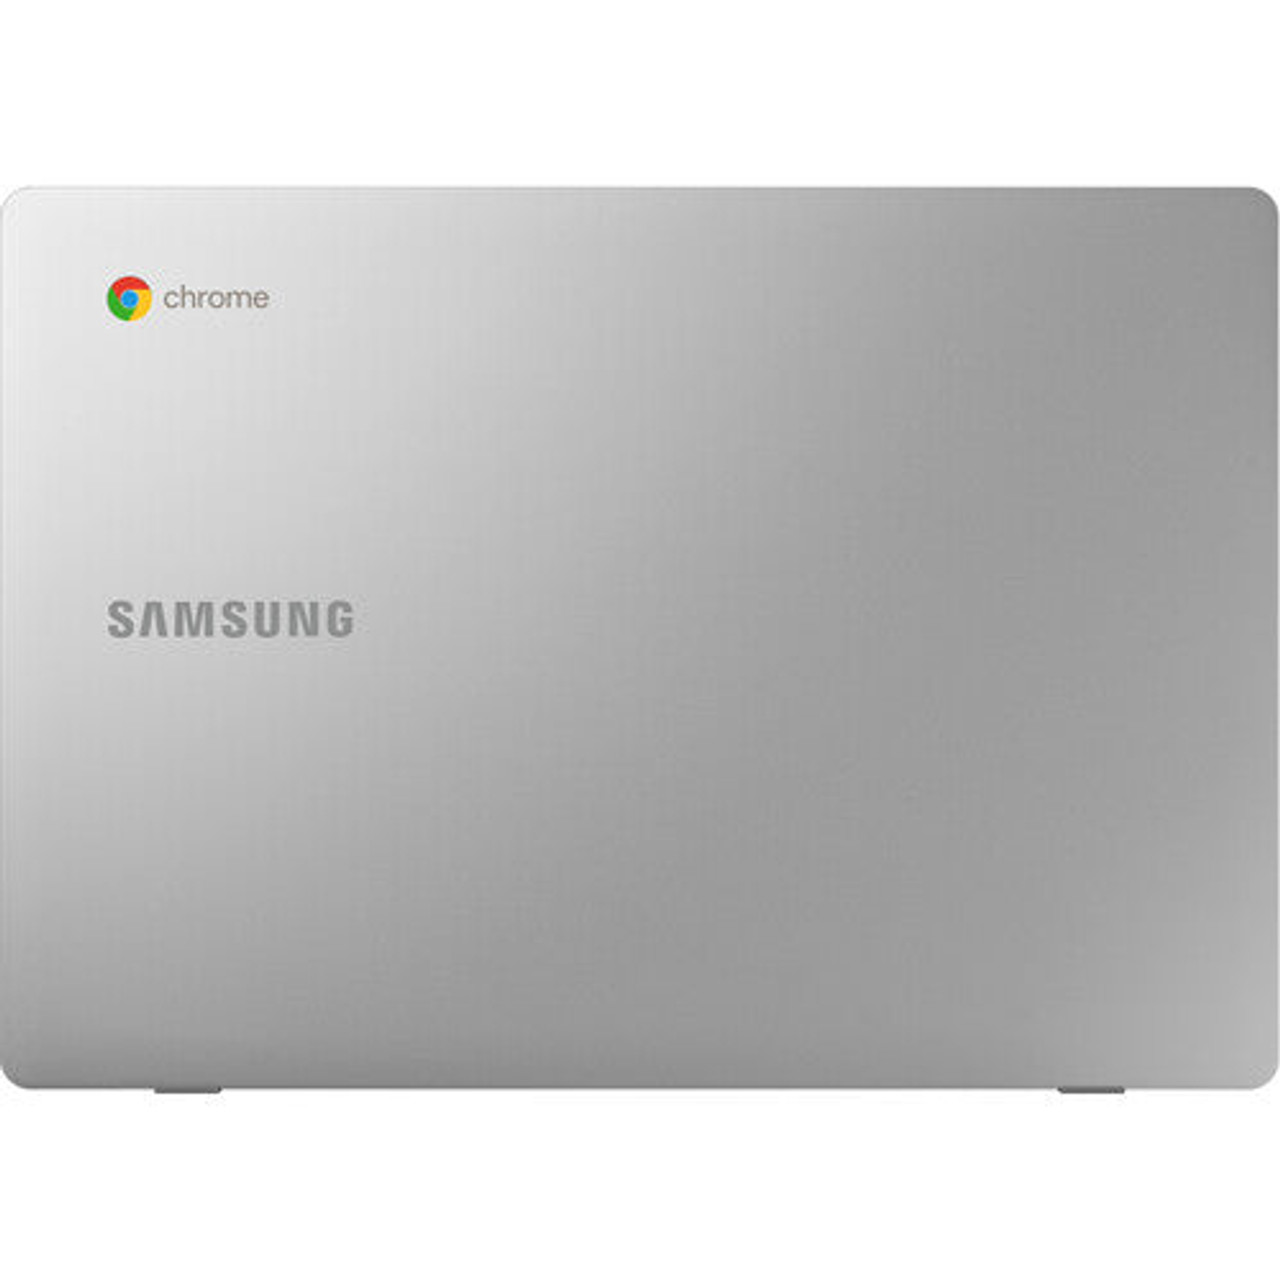 Samsung XE310XBA-K03US-RB Chromebook 4 Platinum 11.6" 6GB 64GB Cert Refurbished